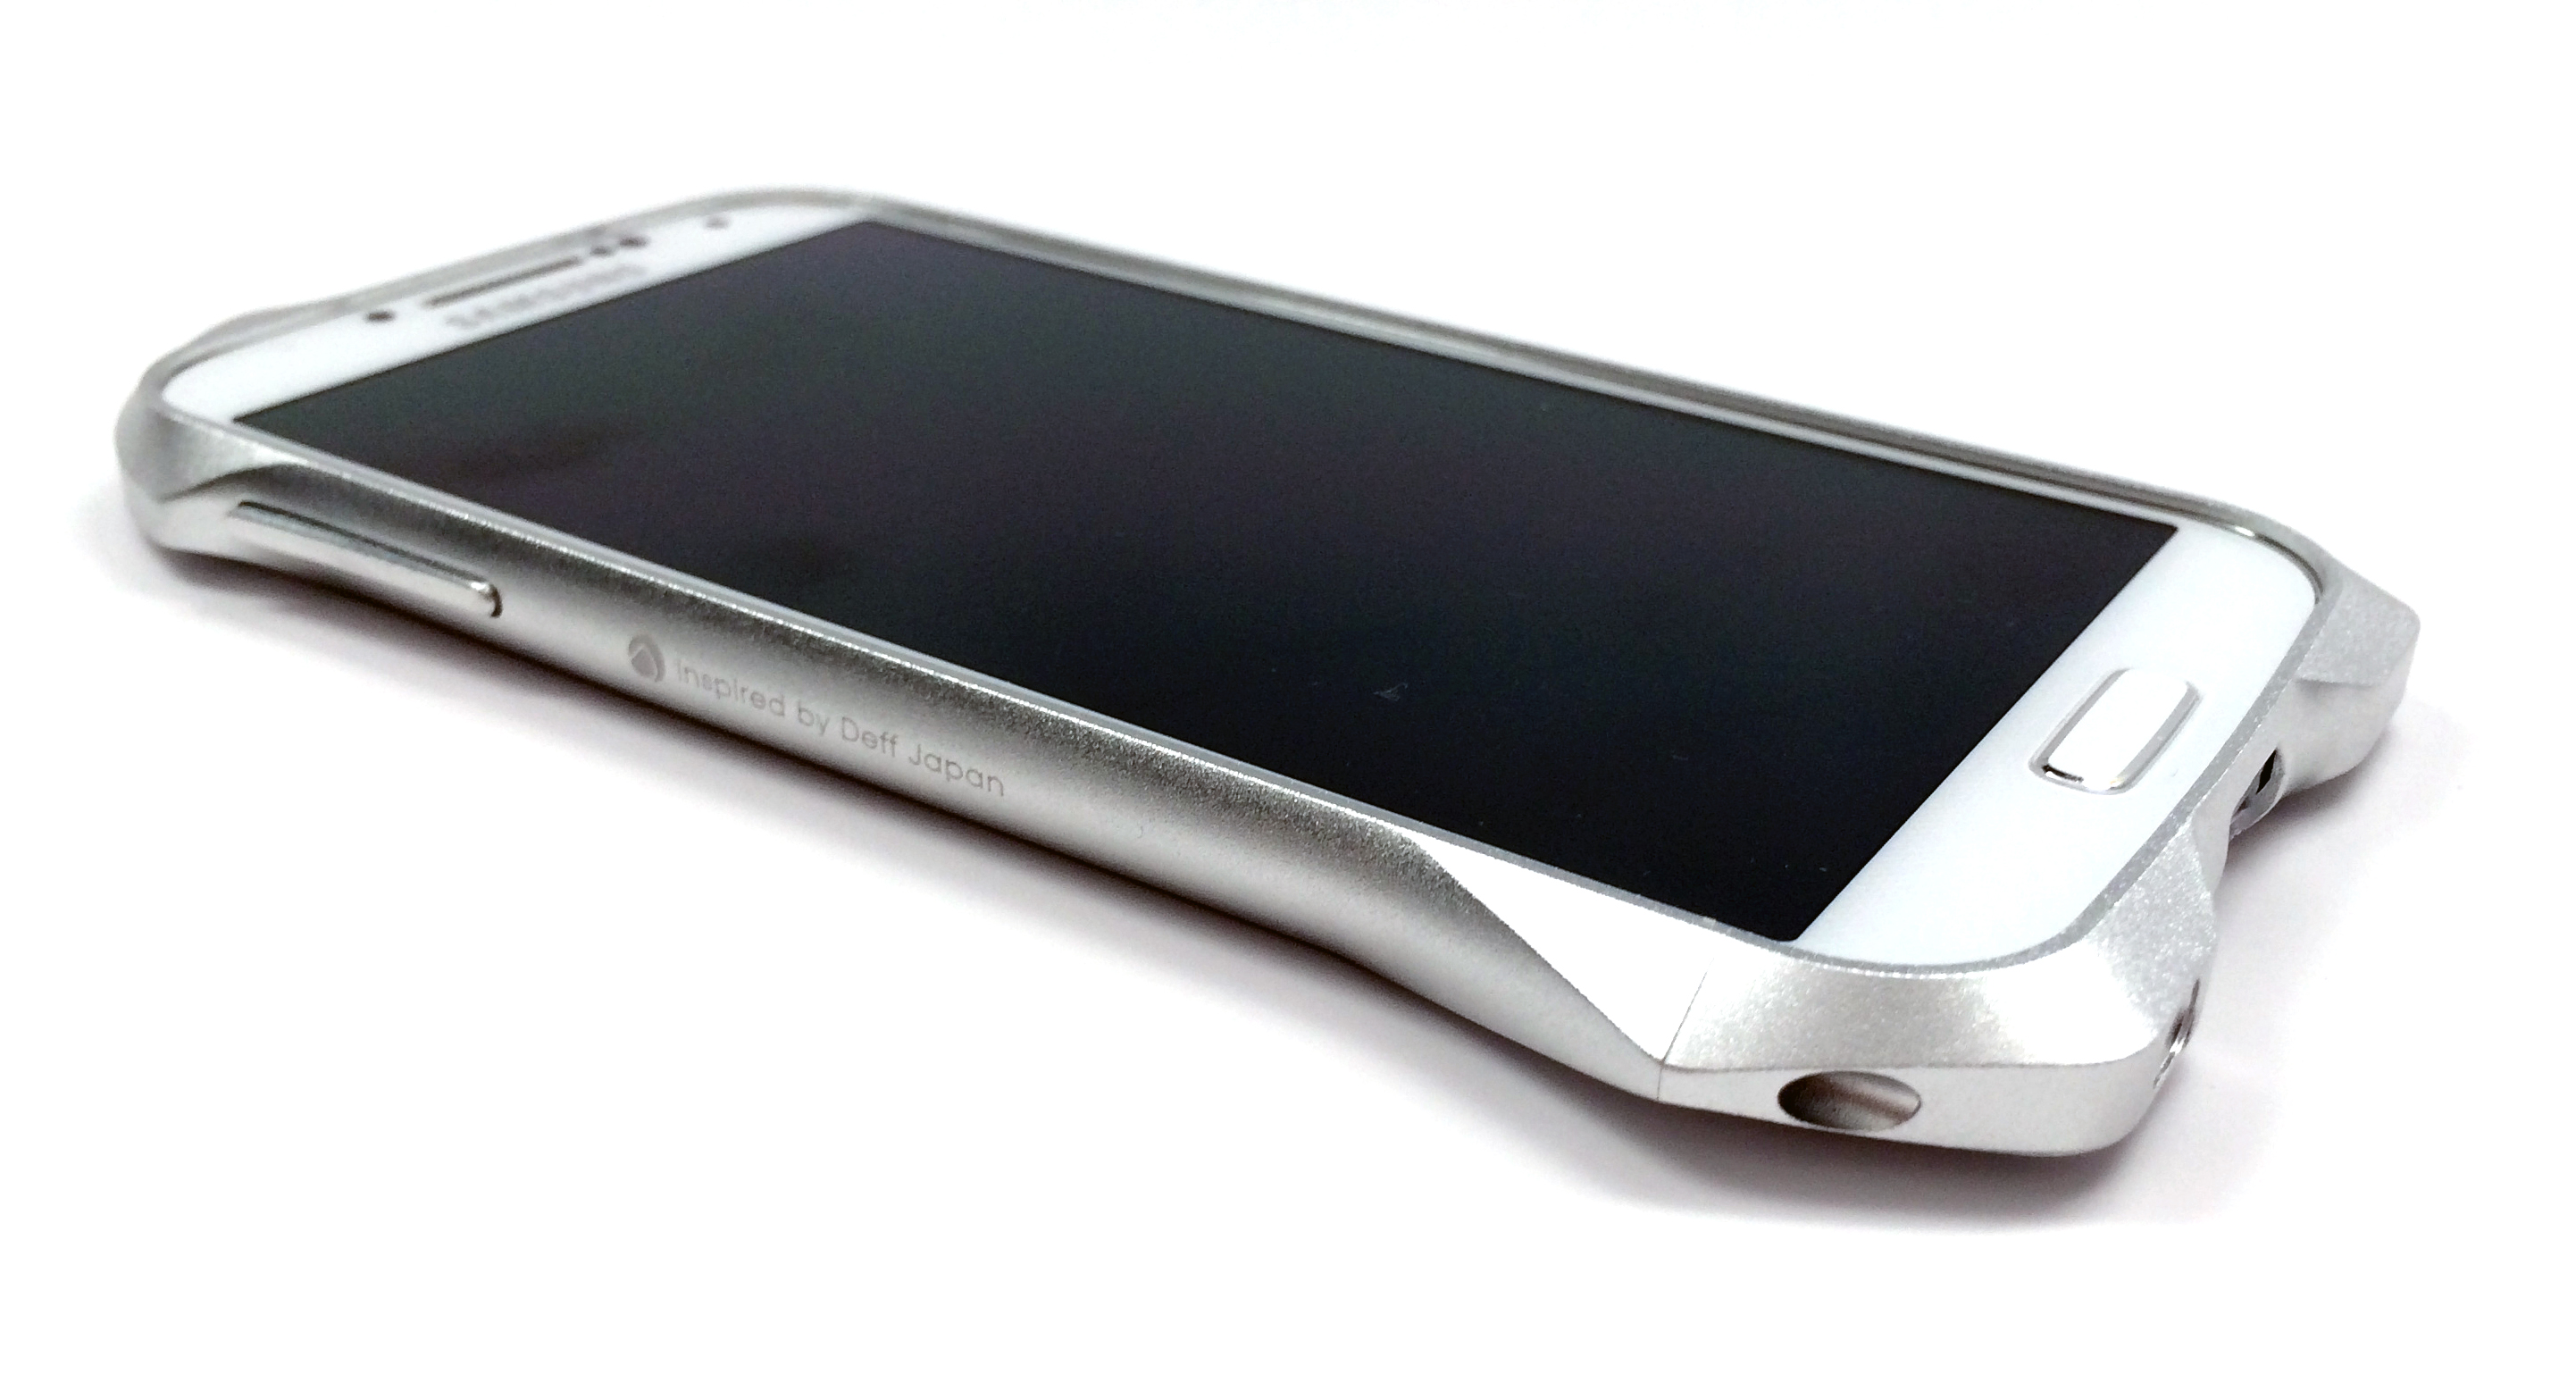 The Samsung Galaxy S5 will reportedly skip a fingerprint sensor.